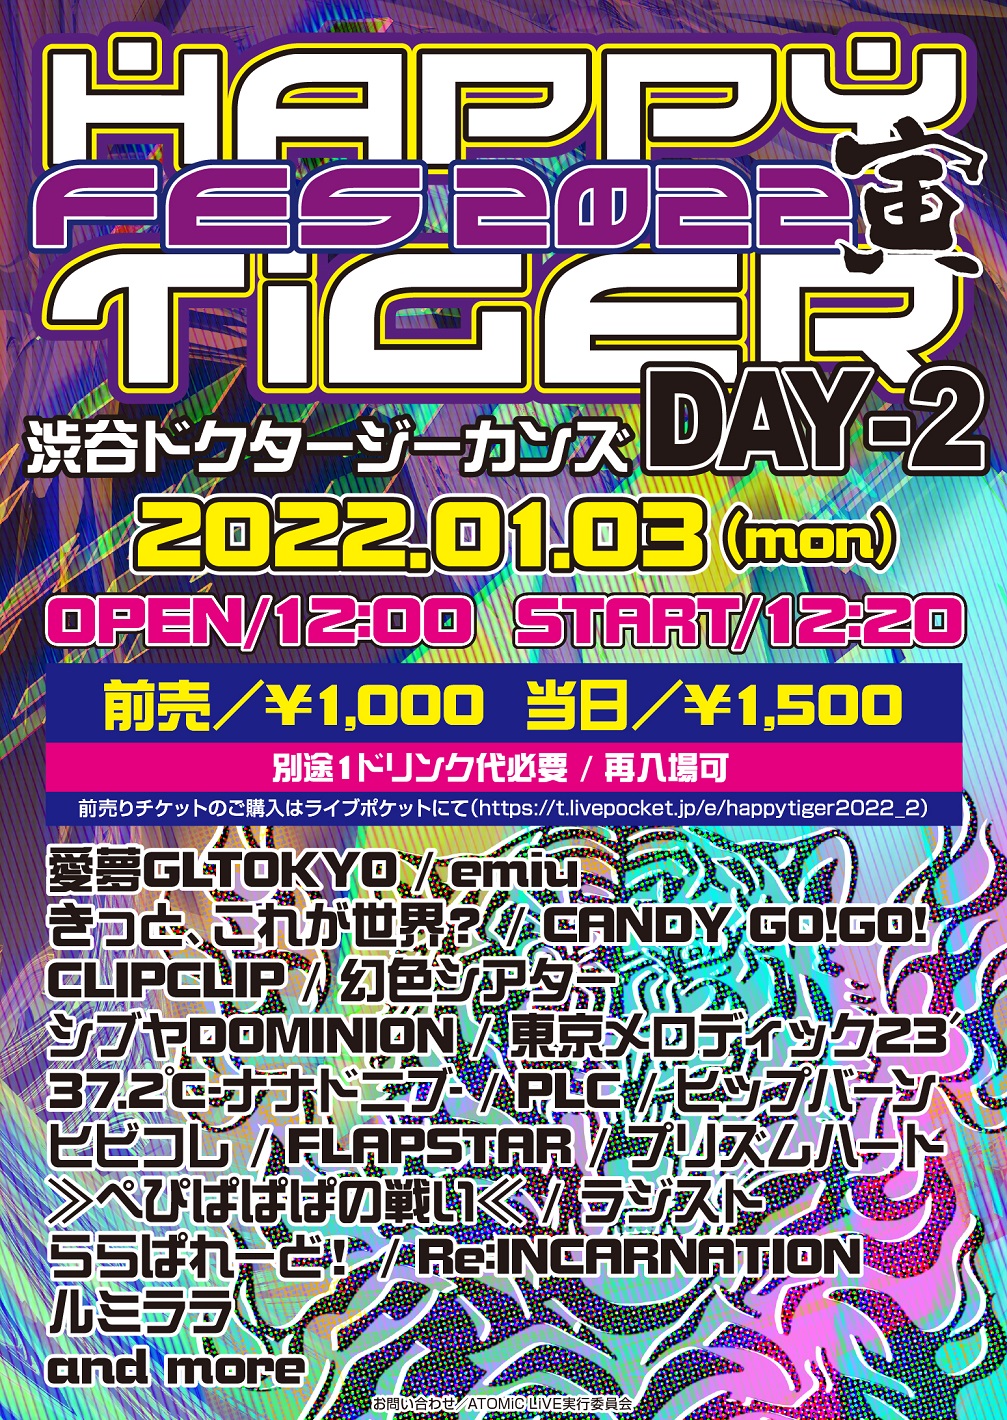 HAPPY TIGER(寅) FES 2022 -DAY2-